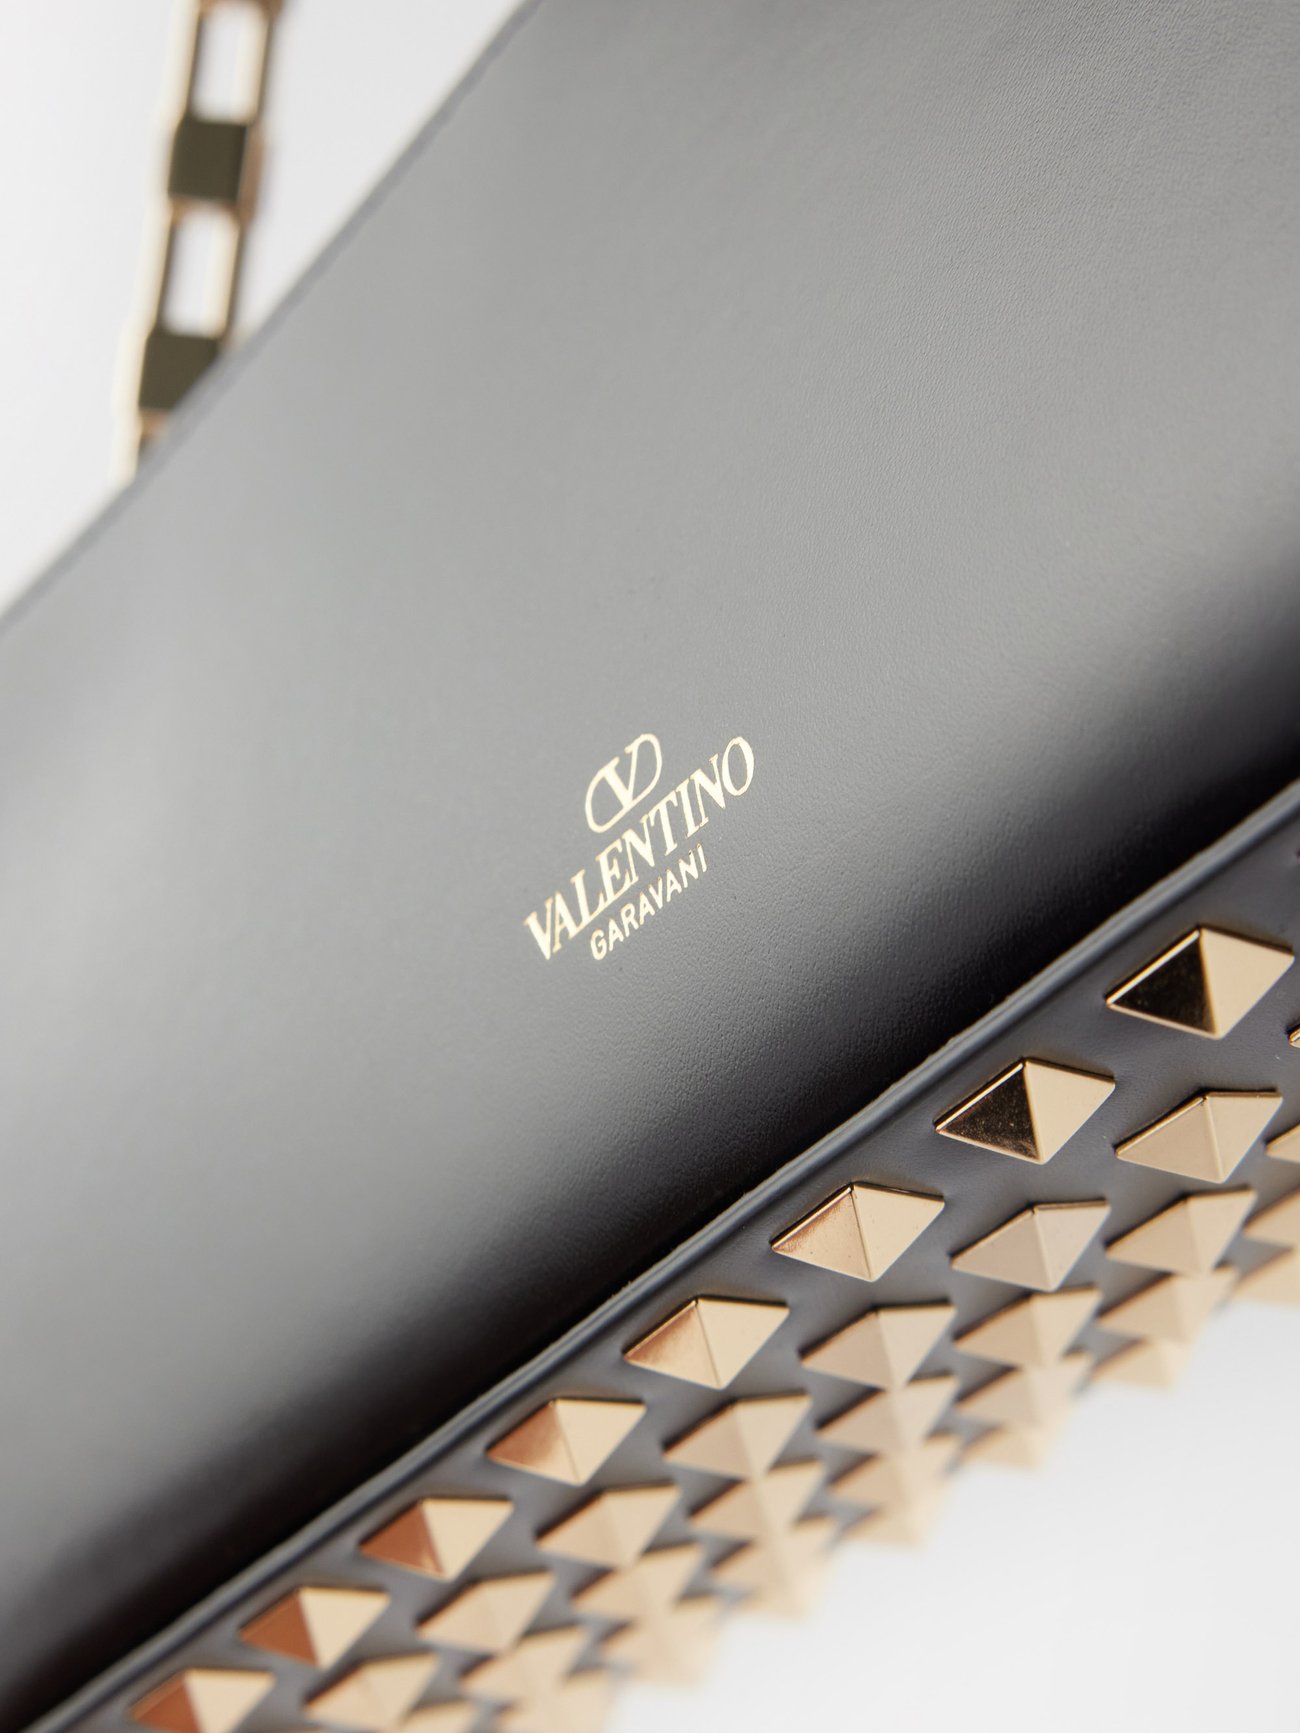 Valentino Garavani Men's Rockstud Black Leather Clutch Bag Wrist Strap –  AvaMaria